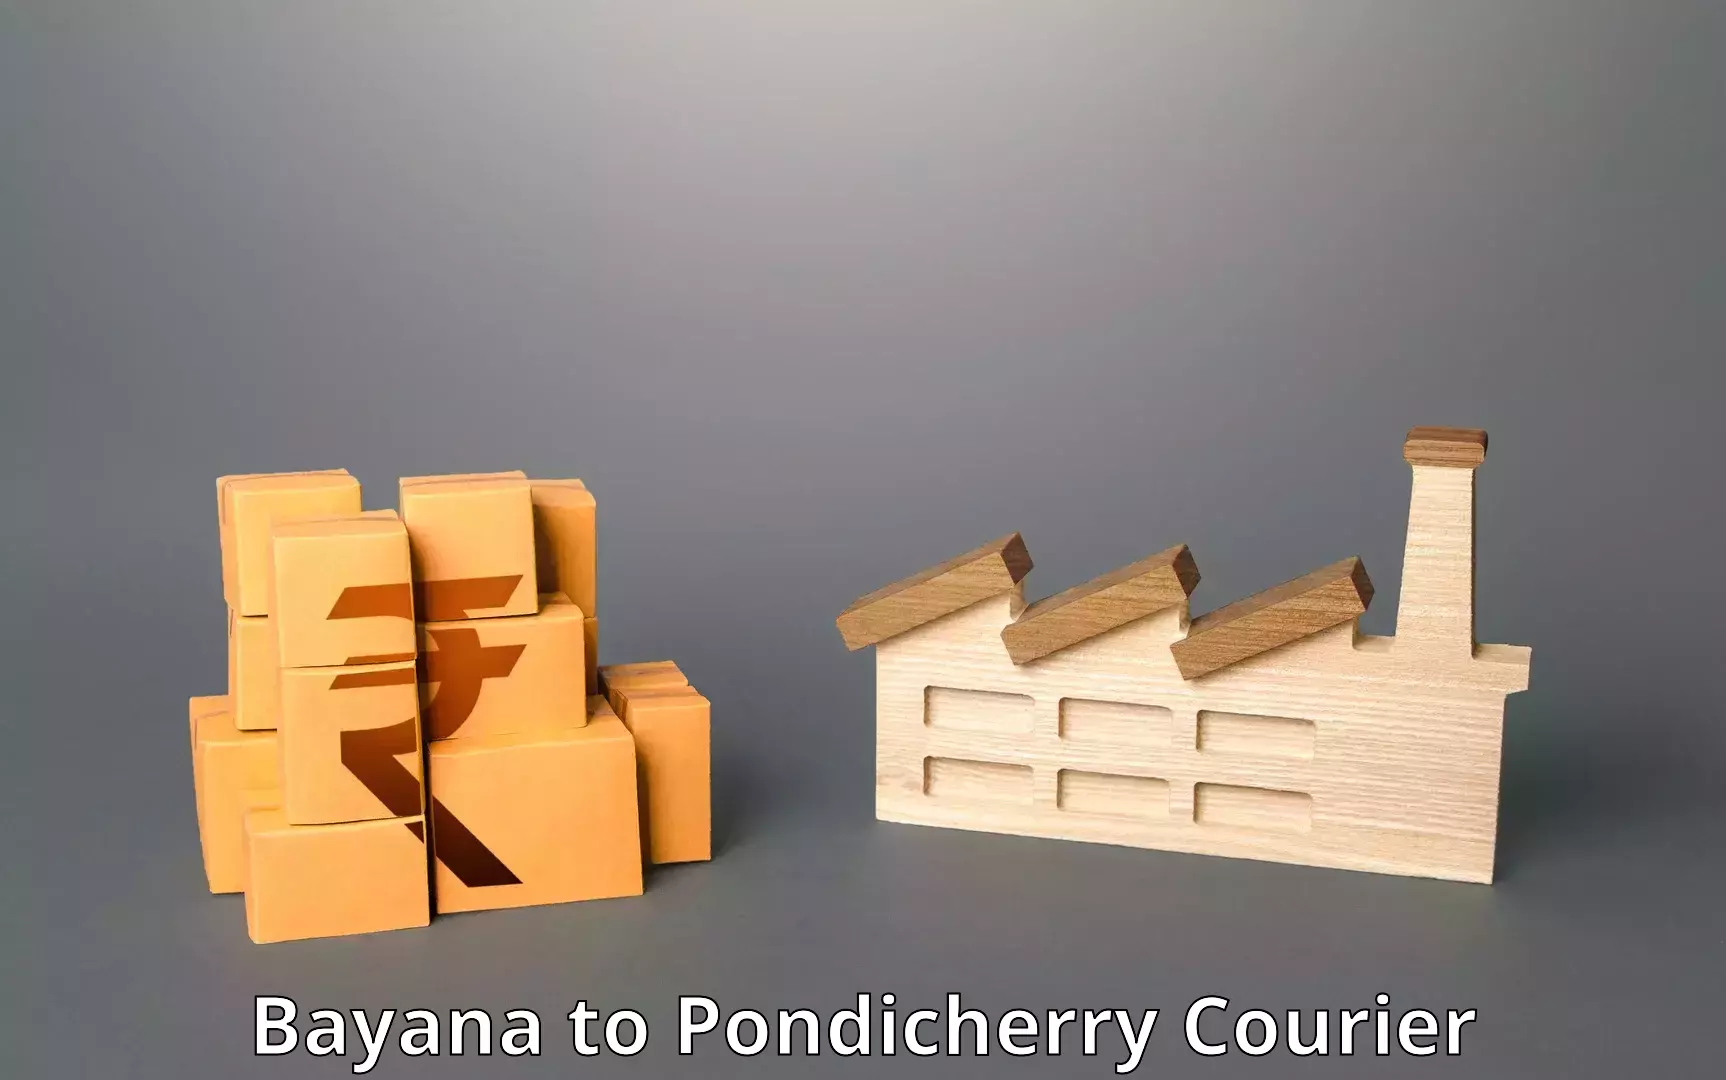 High-performance logistics Bayana to Pondicherry University